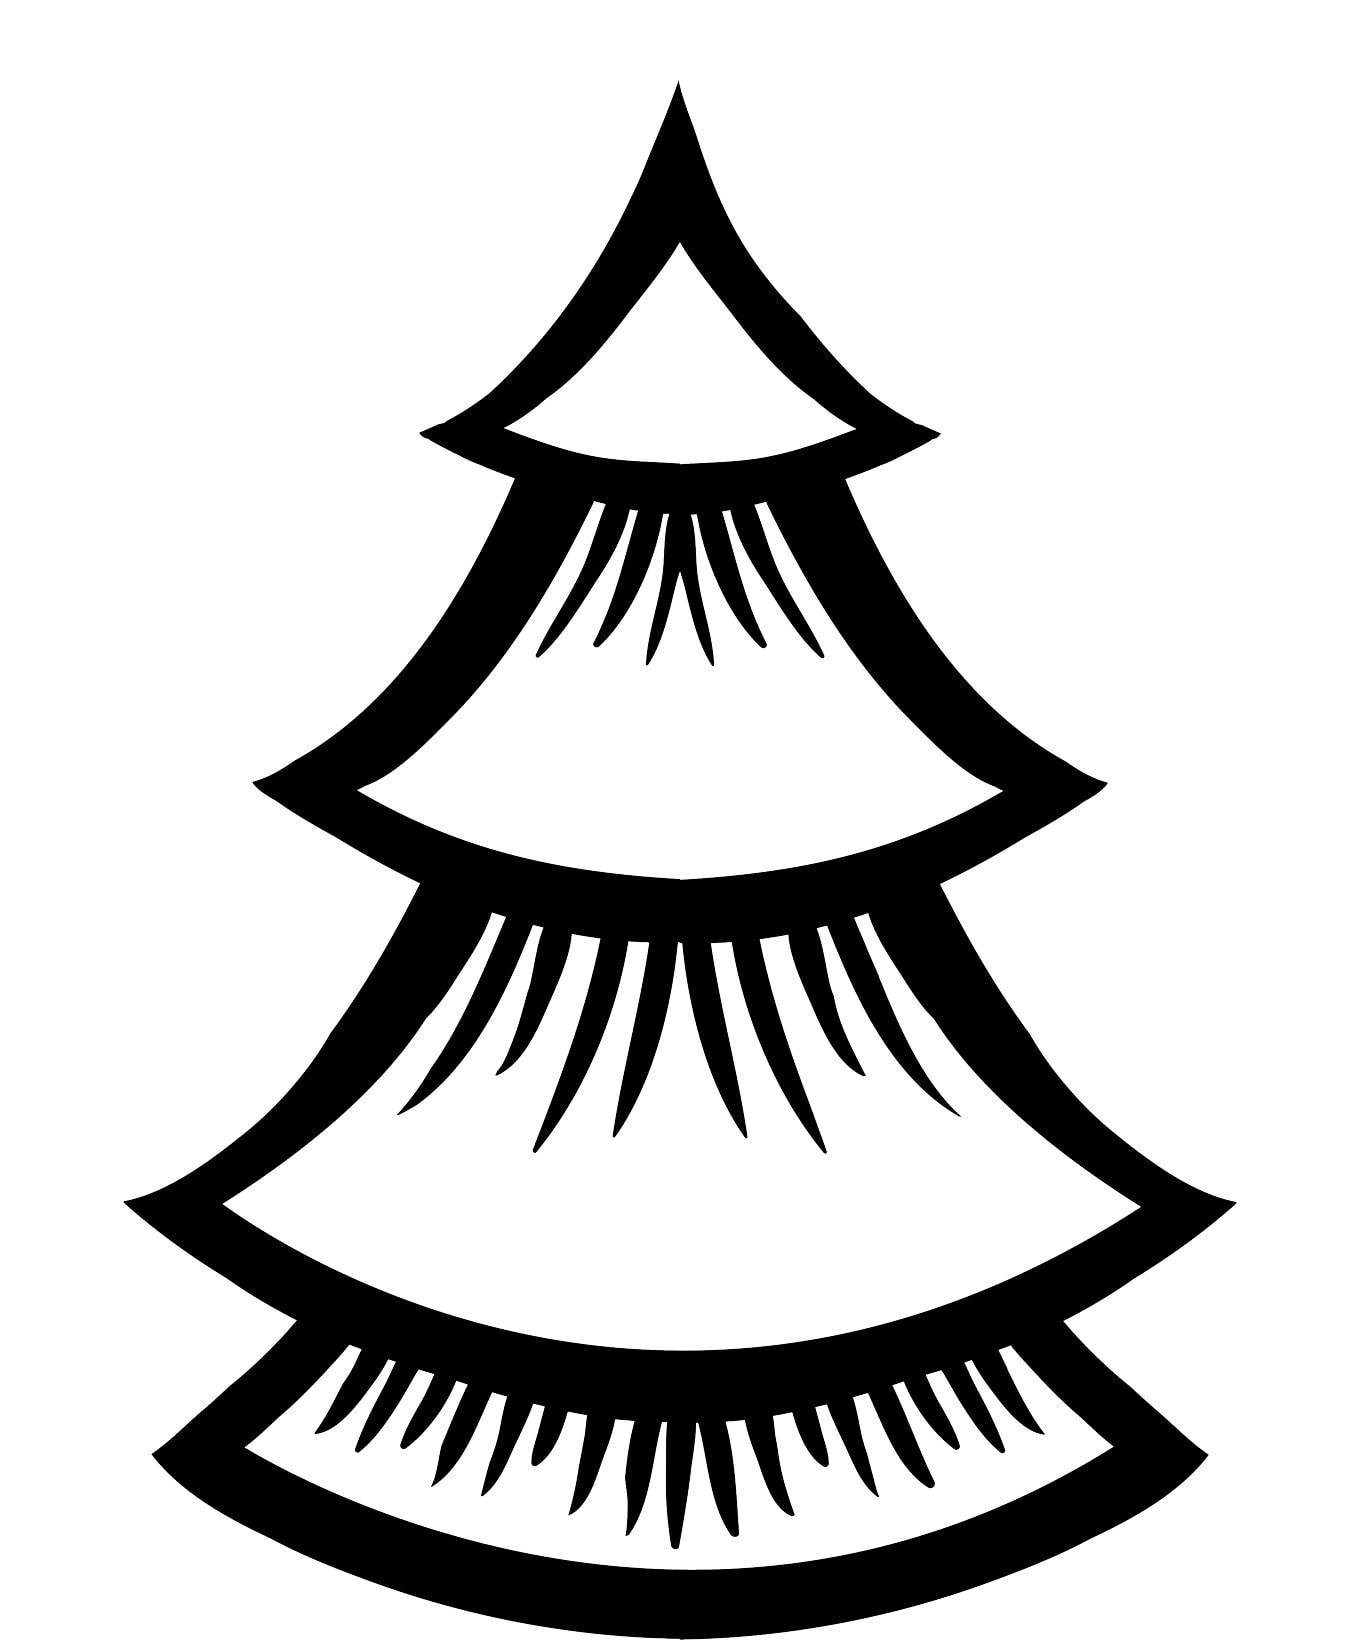 Simple And Basic Christmas Tree Design